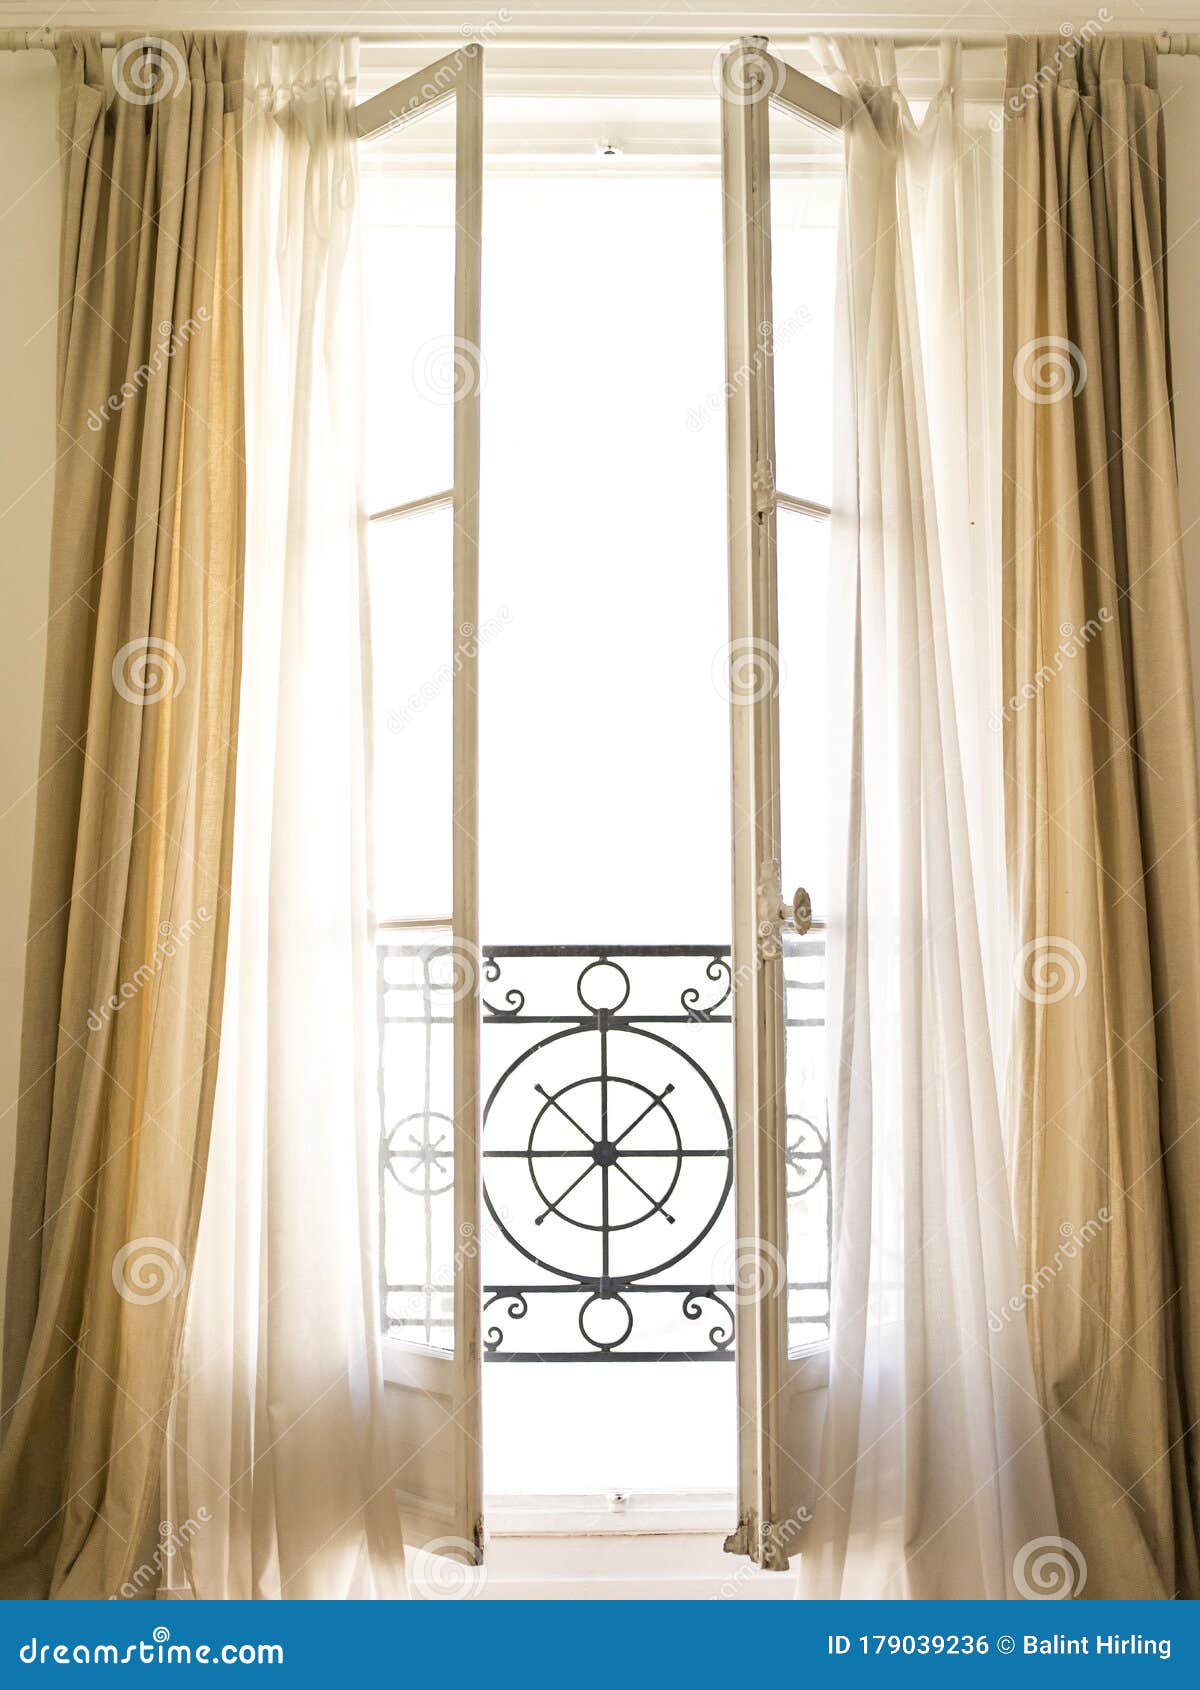 Beautiful Parisian Window With A Balcony Stock Photo Image Of Design